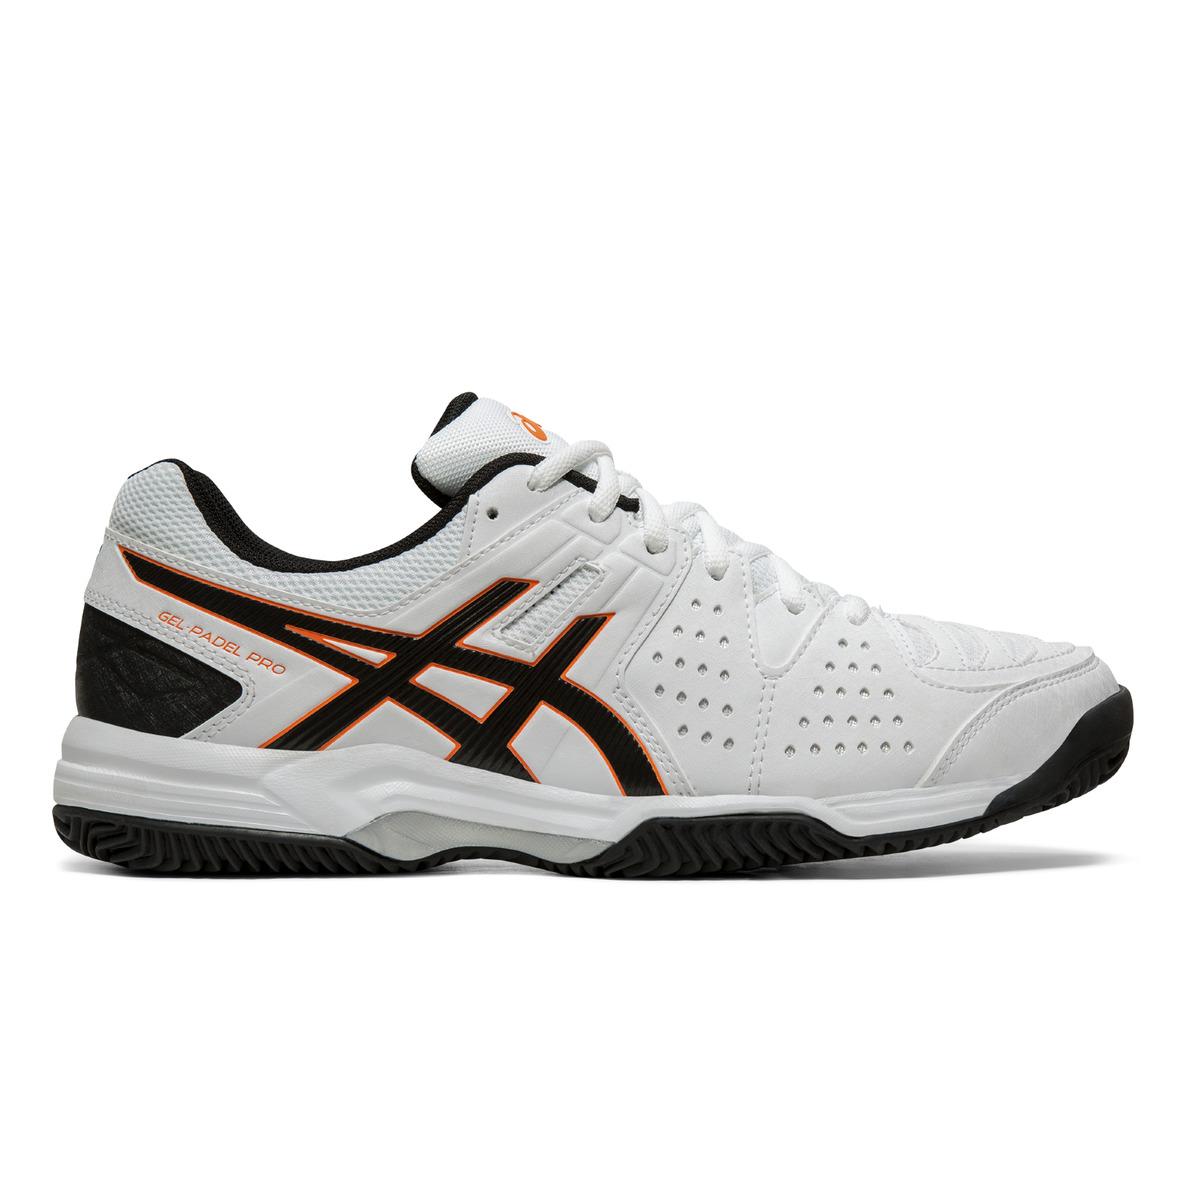 Asics Gel-padel Pro 3 Sg Paddle Tennis Shoes in White for Men - Lyst